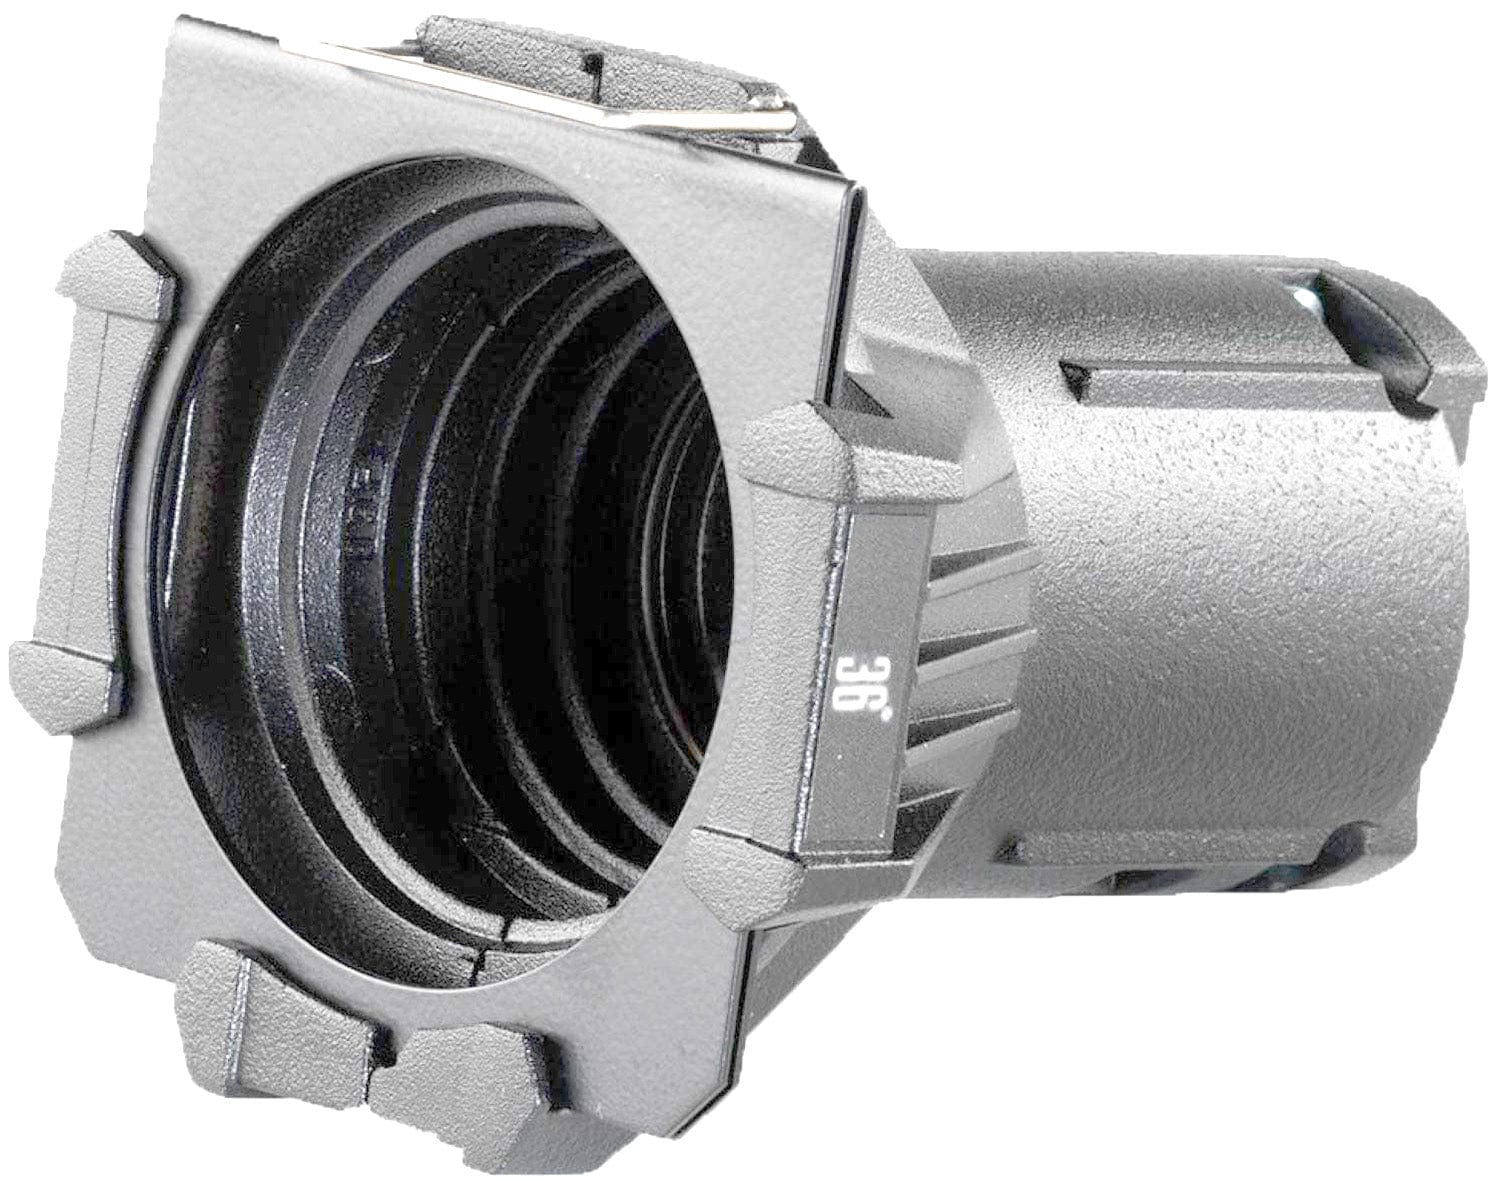 ETC Source Four Mini LED Ellipsoidal 4000 K, 36-Degree Lens Tube with Edison Plug - Silver (Portable) - PSSL ProSound and Stage Lighting